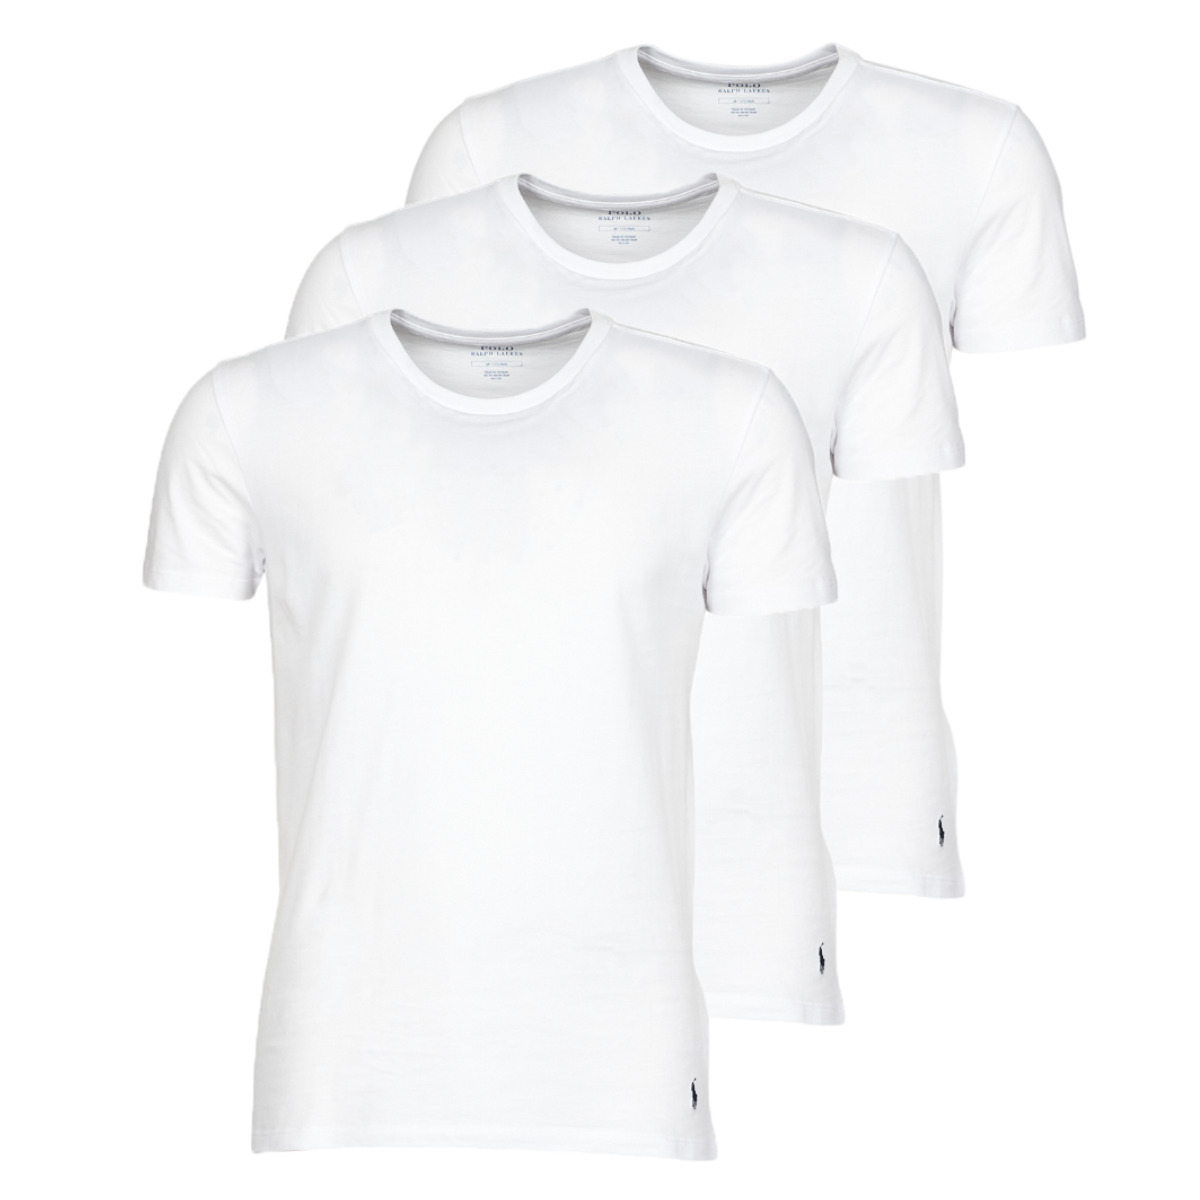 textil Camisetas manga corta Polo Ralph Lauren CREW NECK X3 Blanco